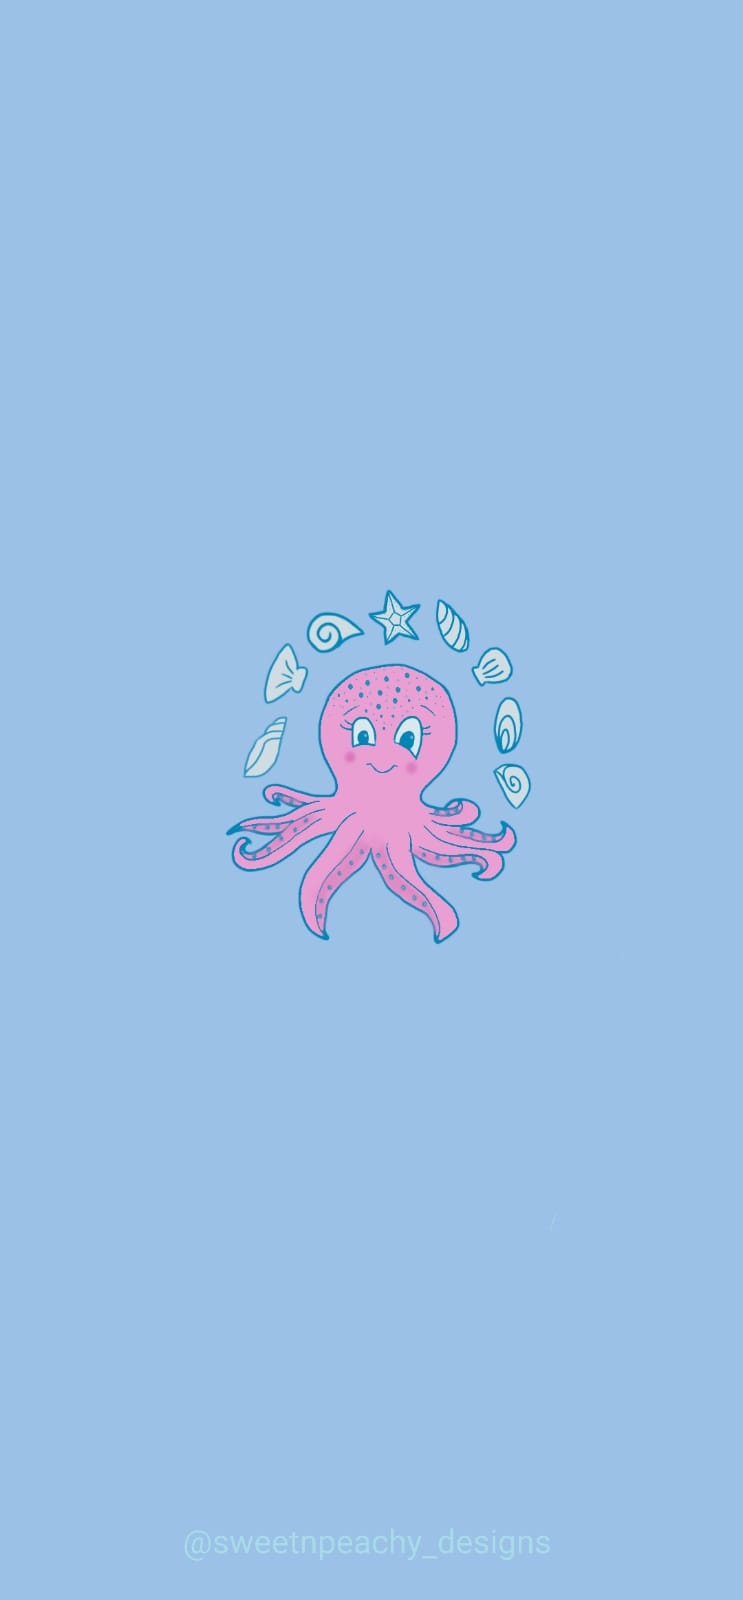 44 Blue Ring Octopus Wallpaper  WallpaperSafari